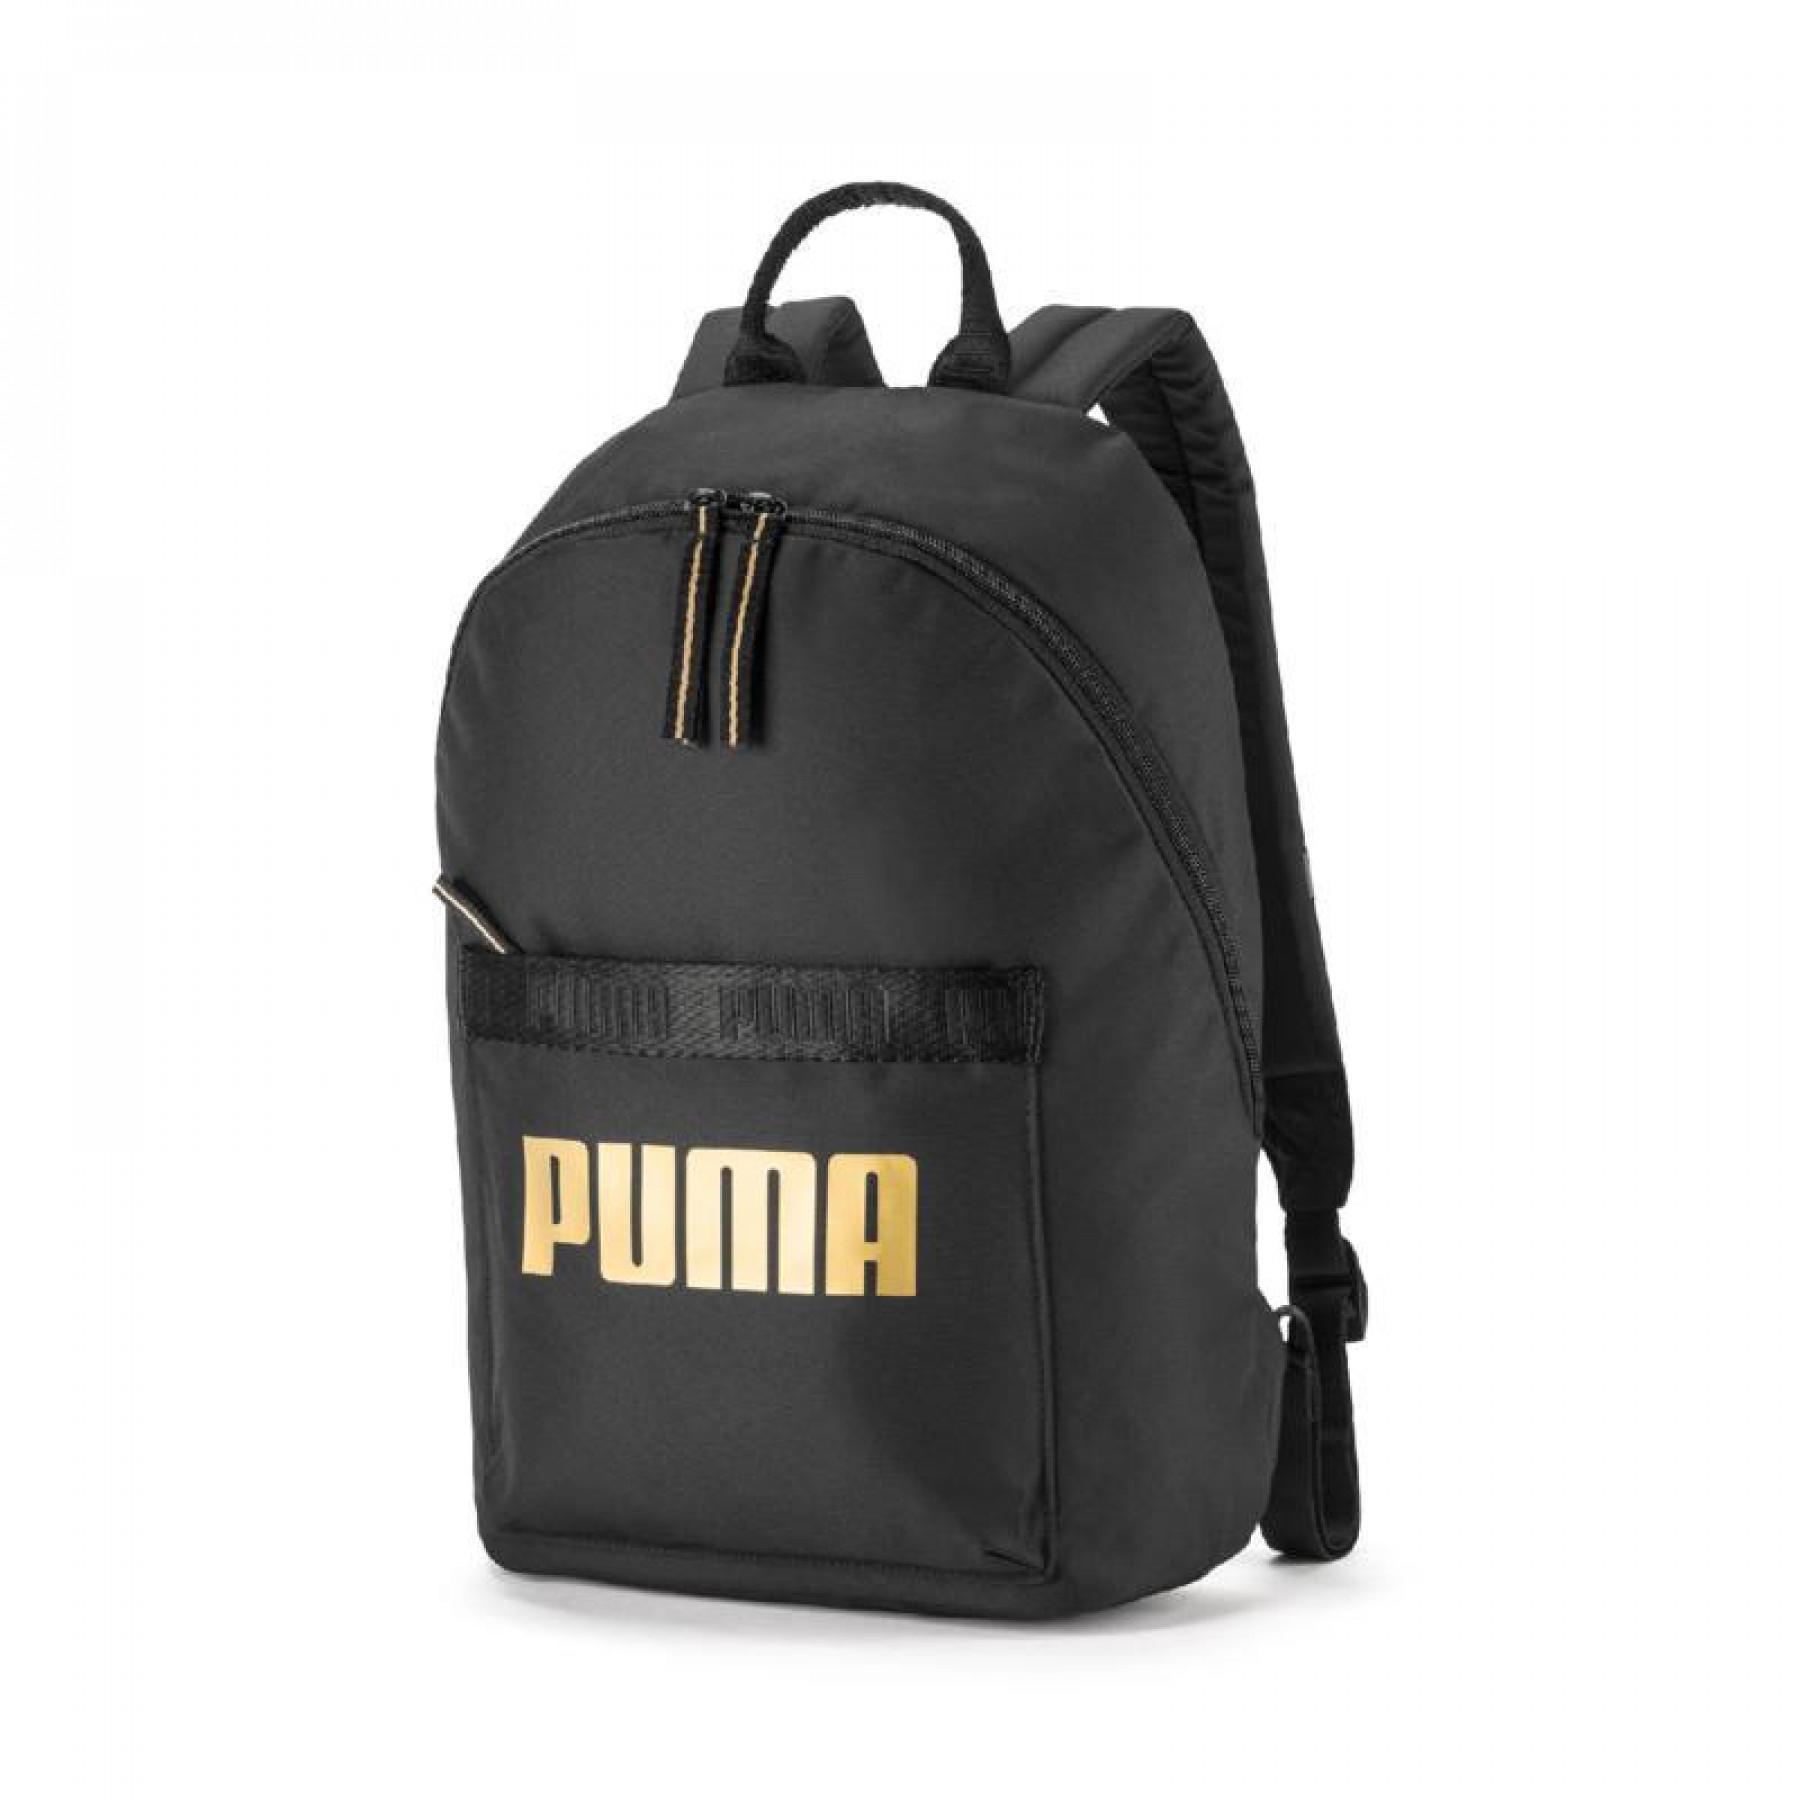 Women's backpack Puma core base